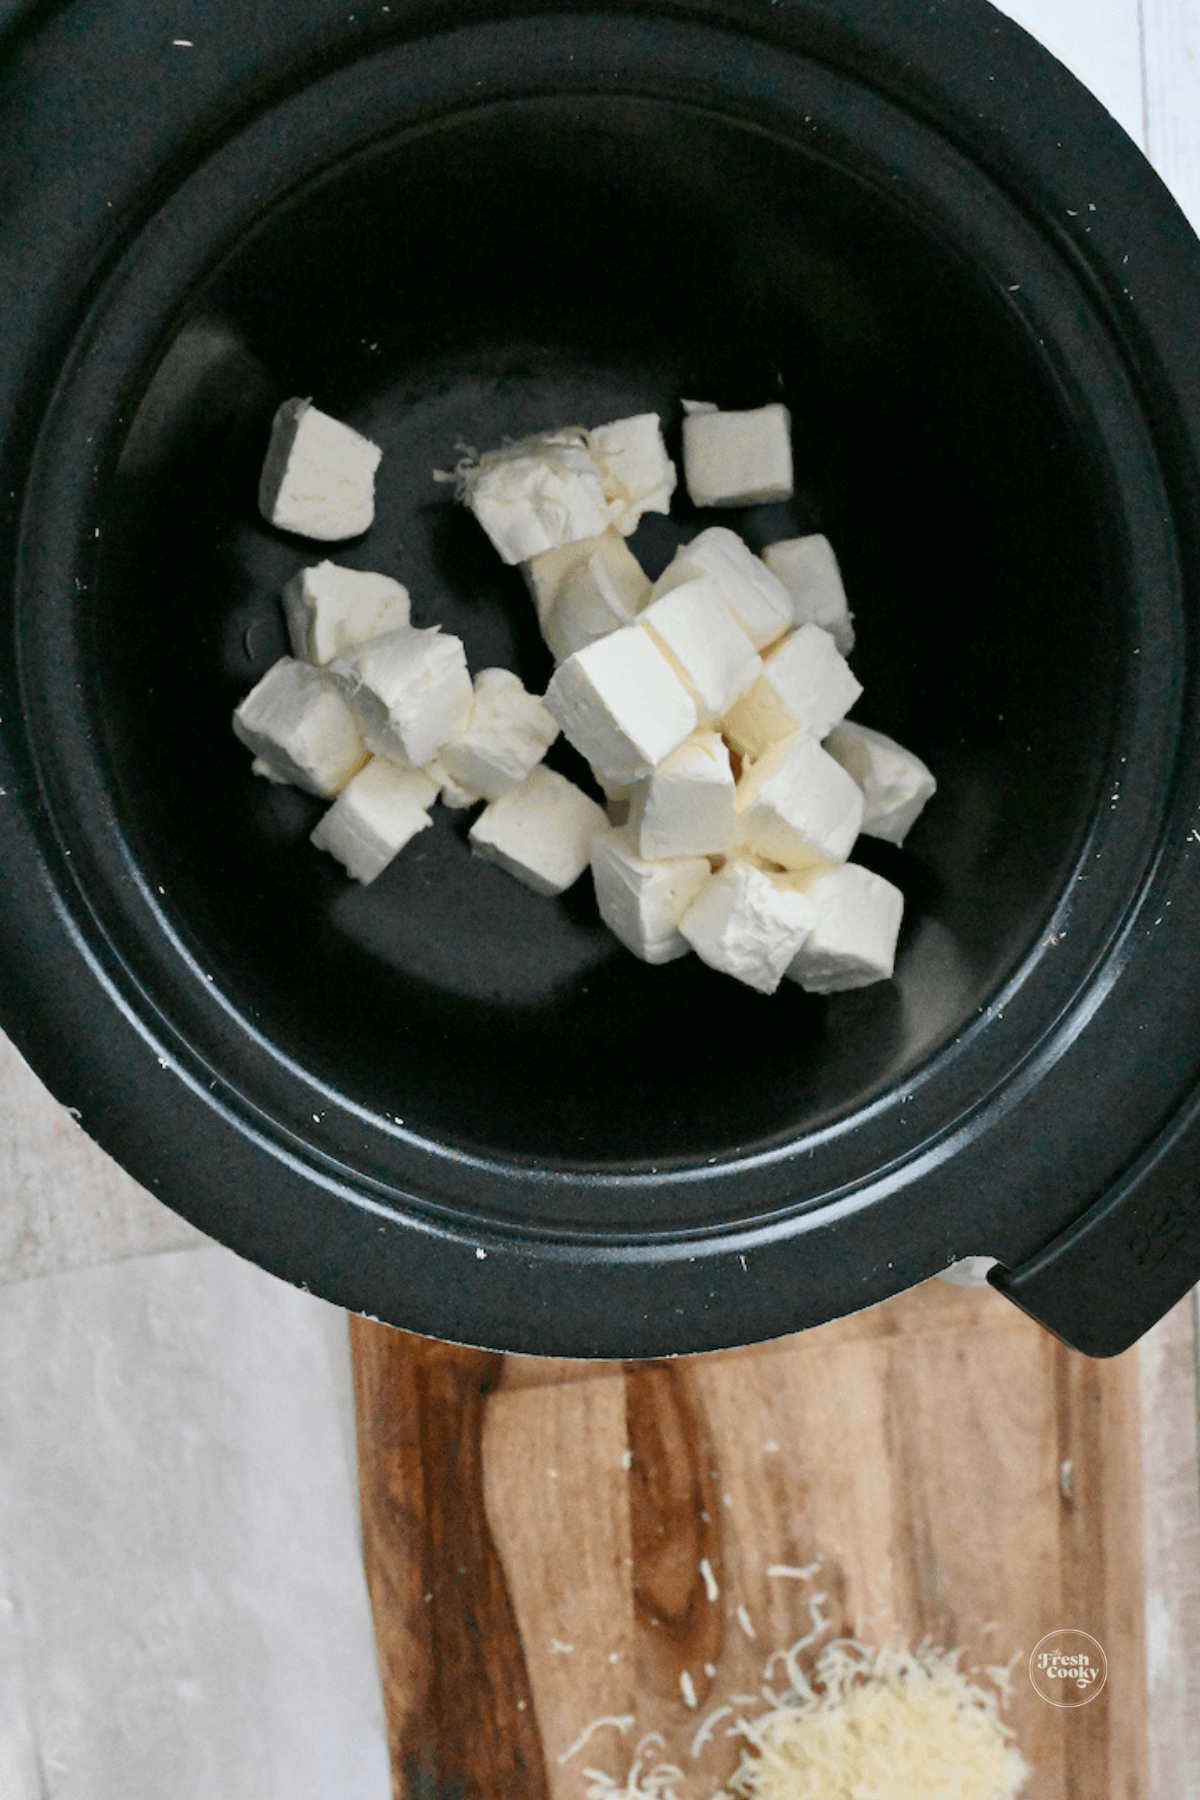 Cream cheese blocks in bottom of slow cooker.